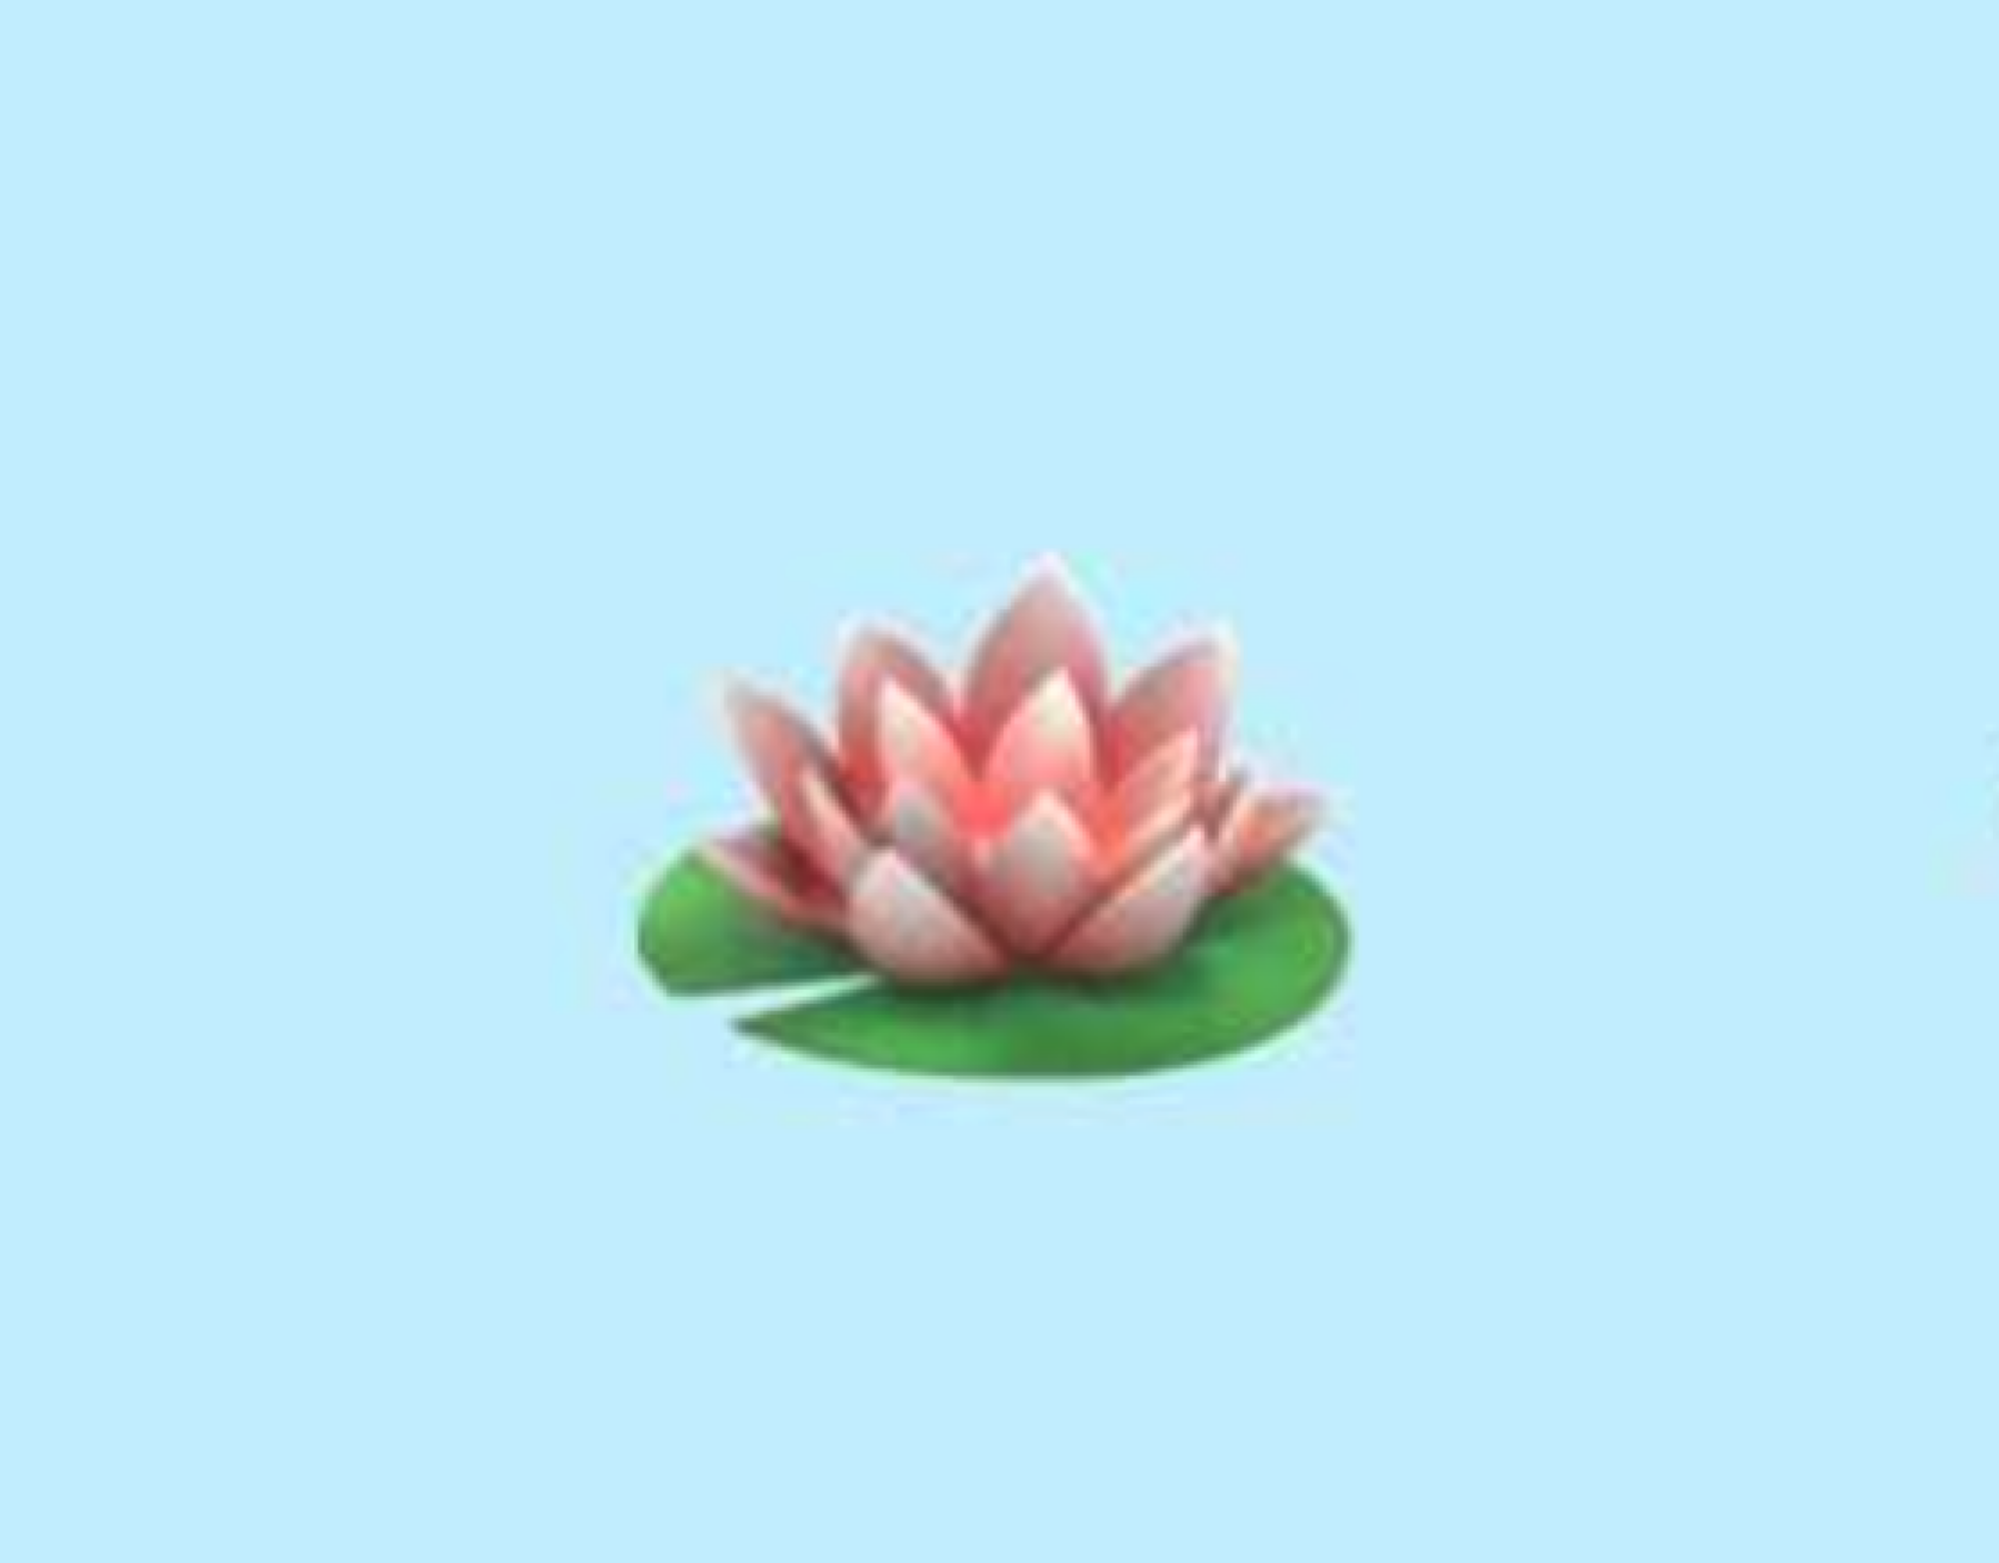 l'emoji lotus rose et vert sur fond bleu clair